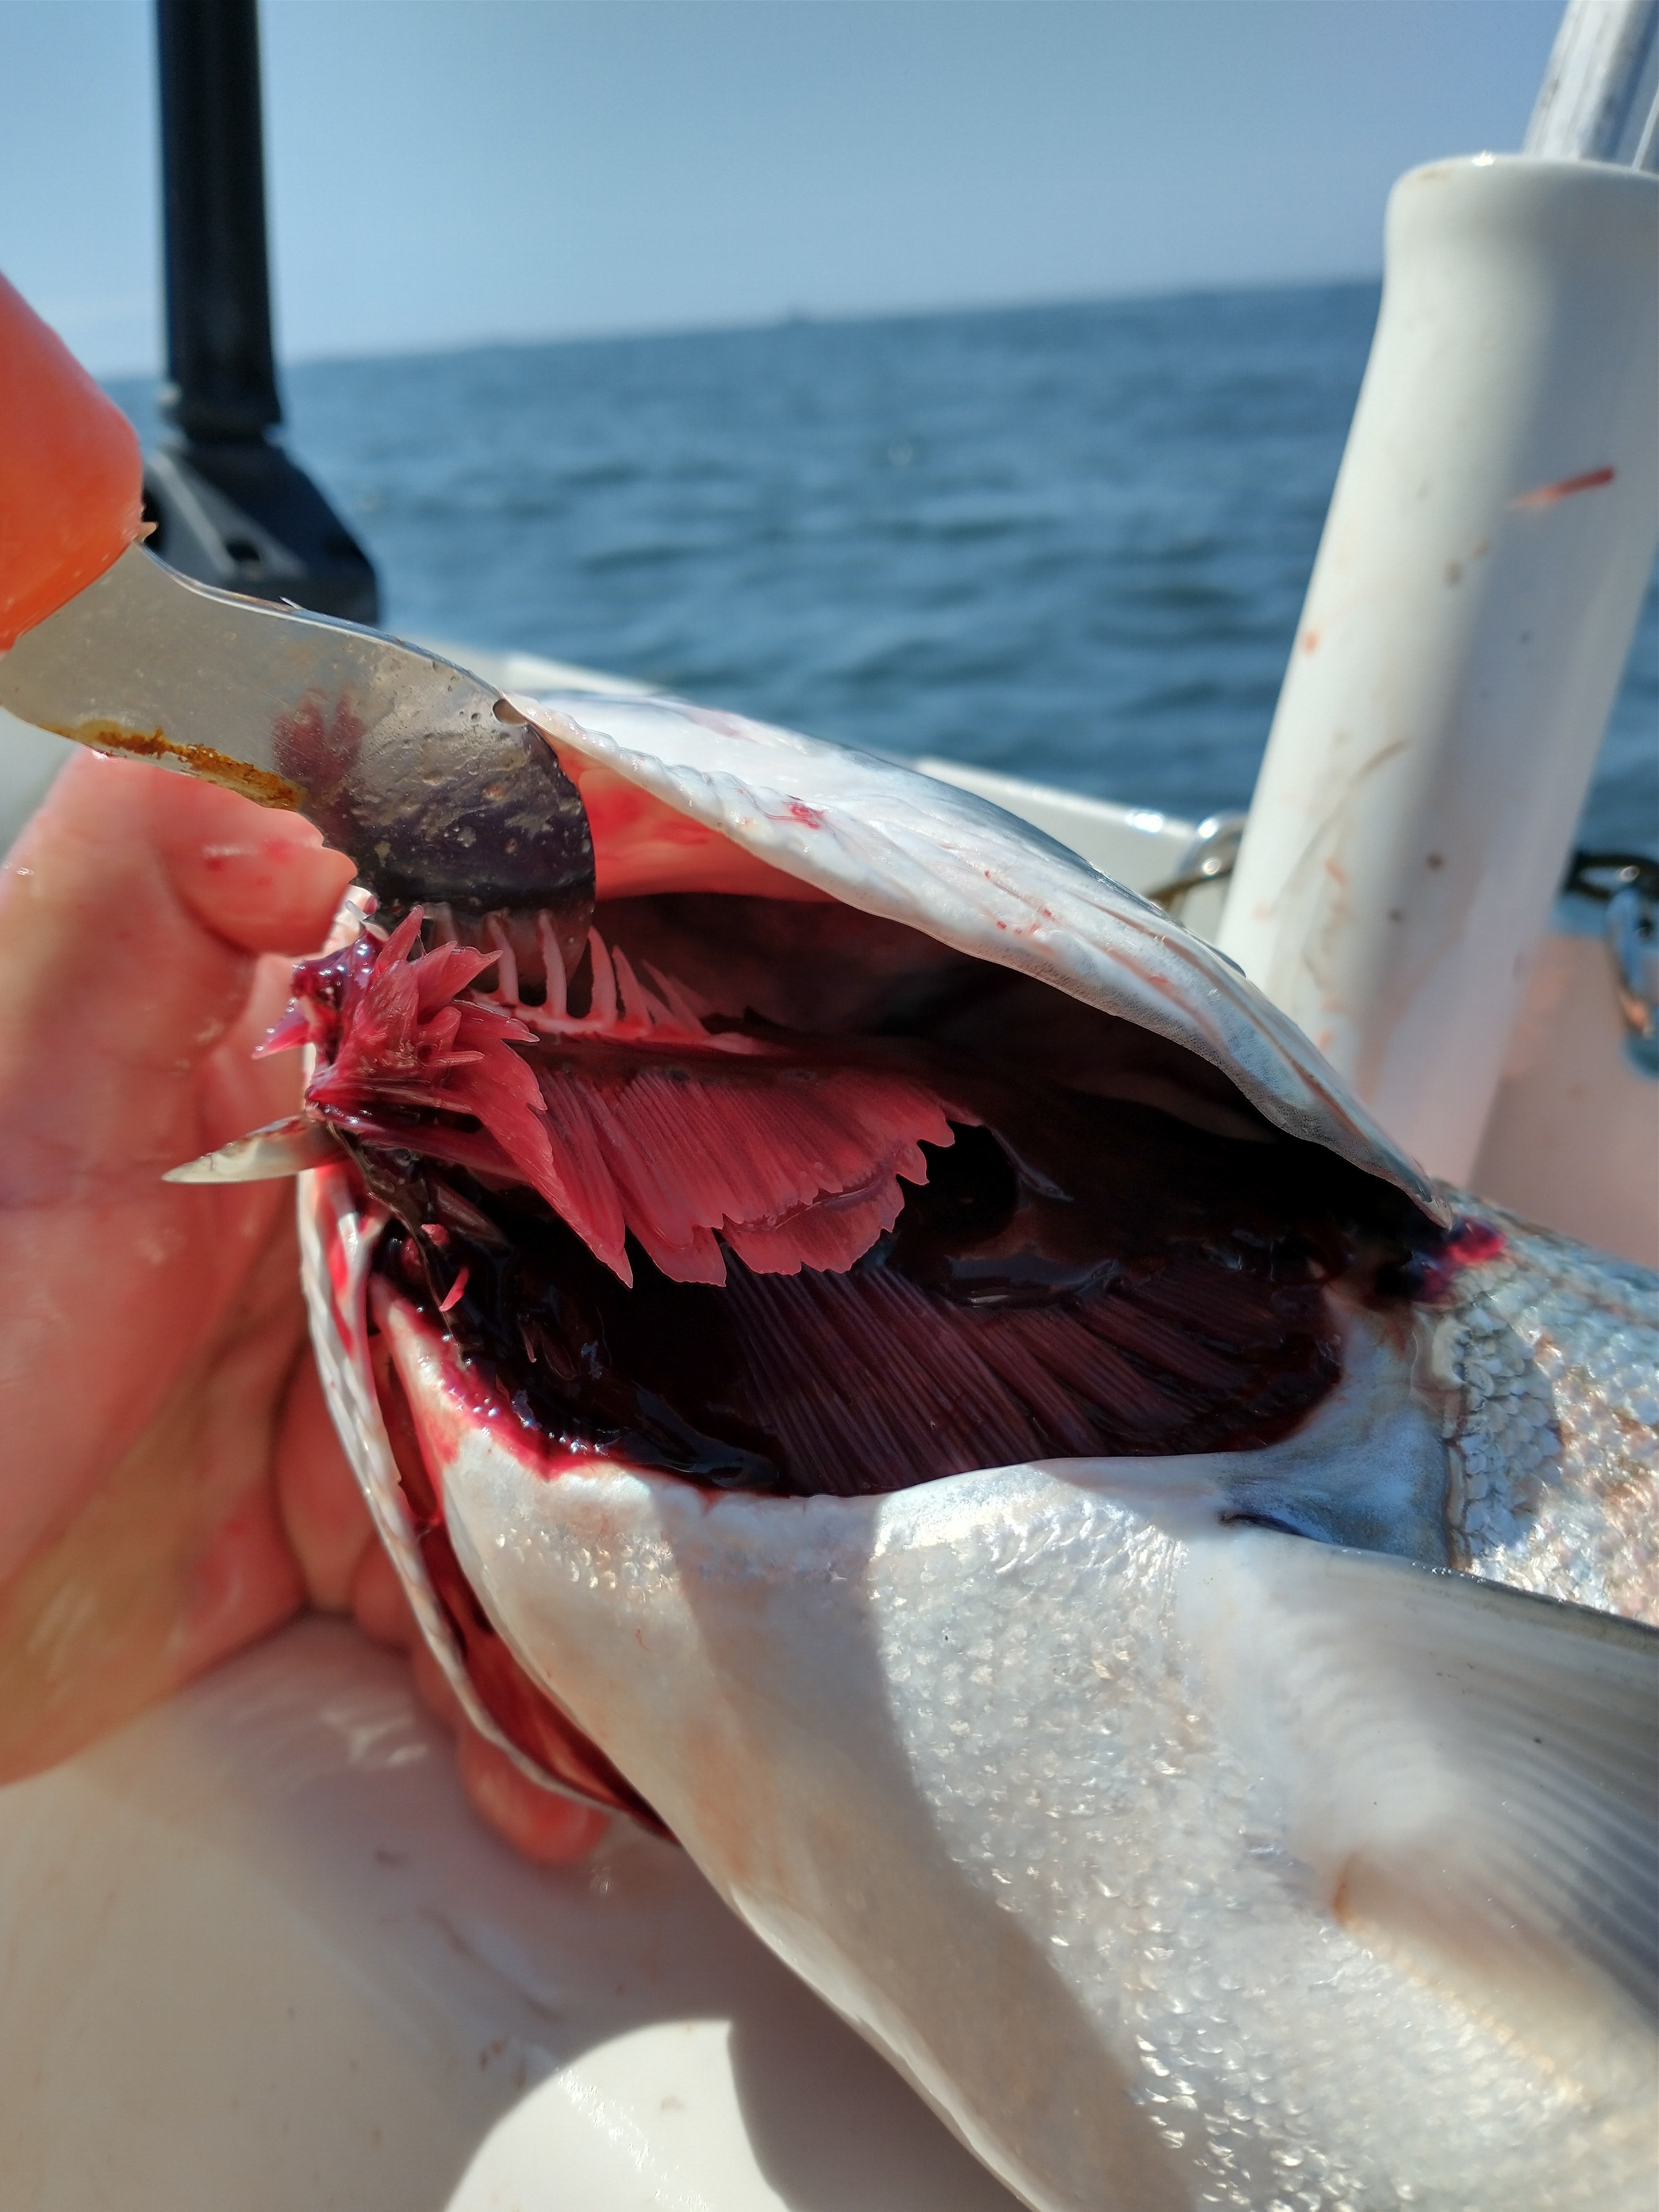 Bleeding/ gutting fish at sea